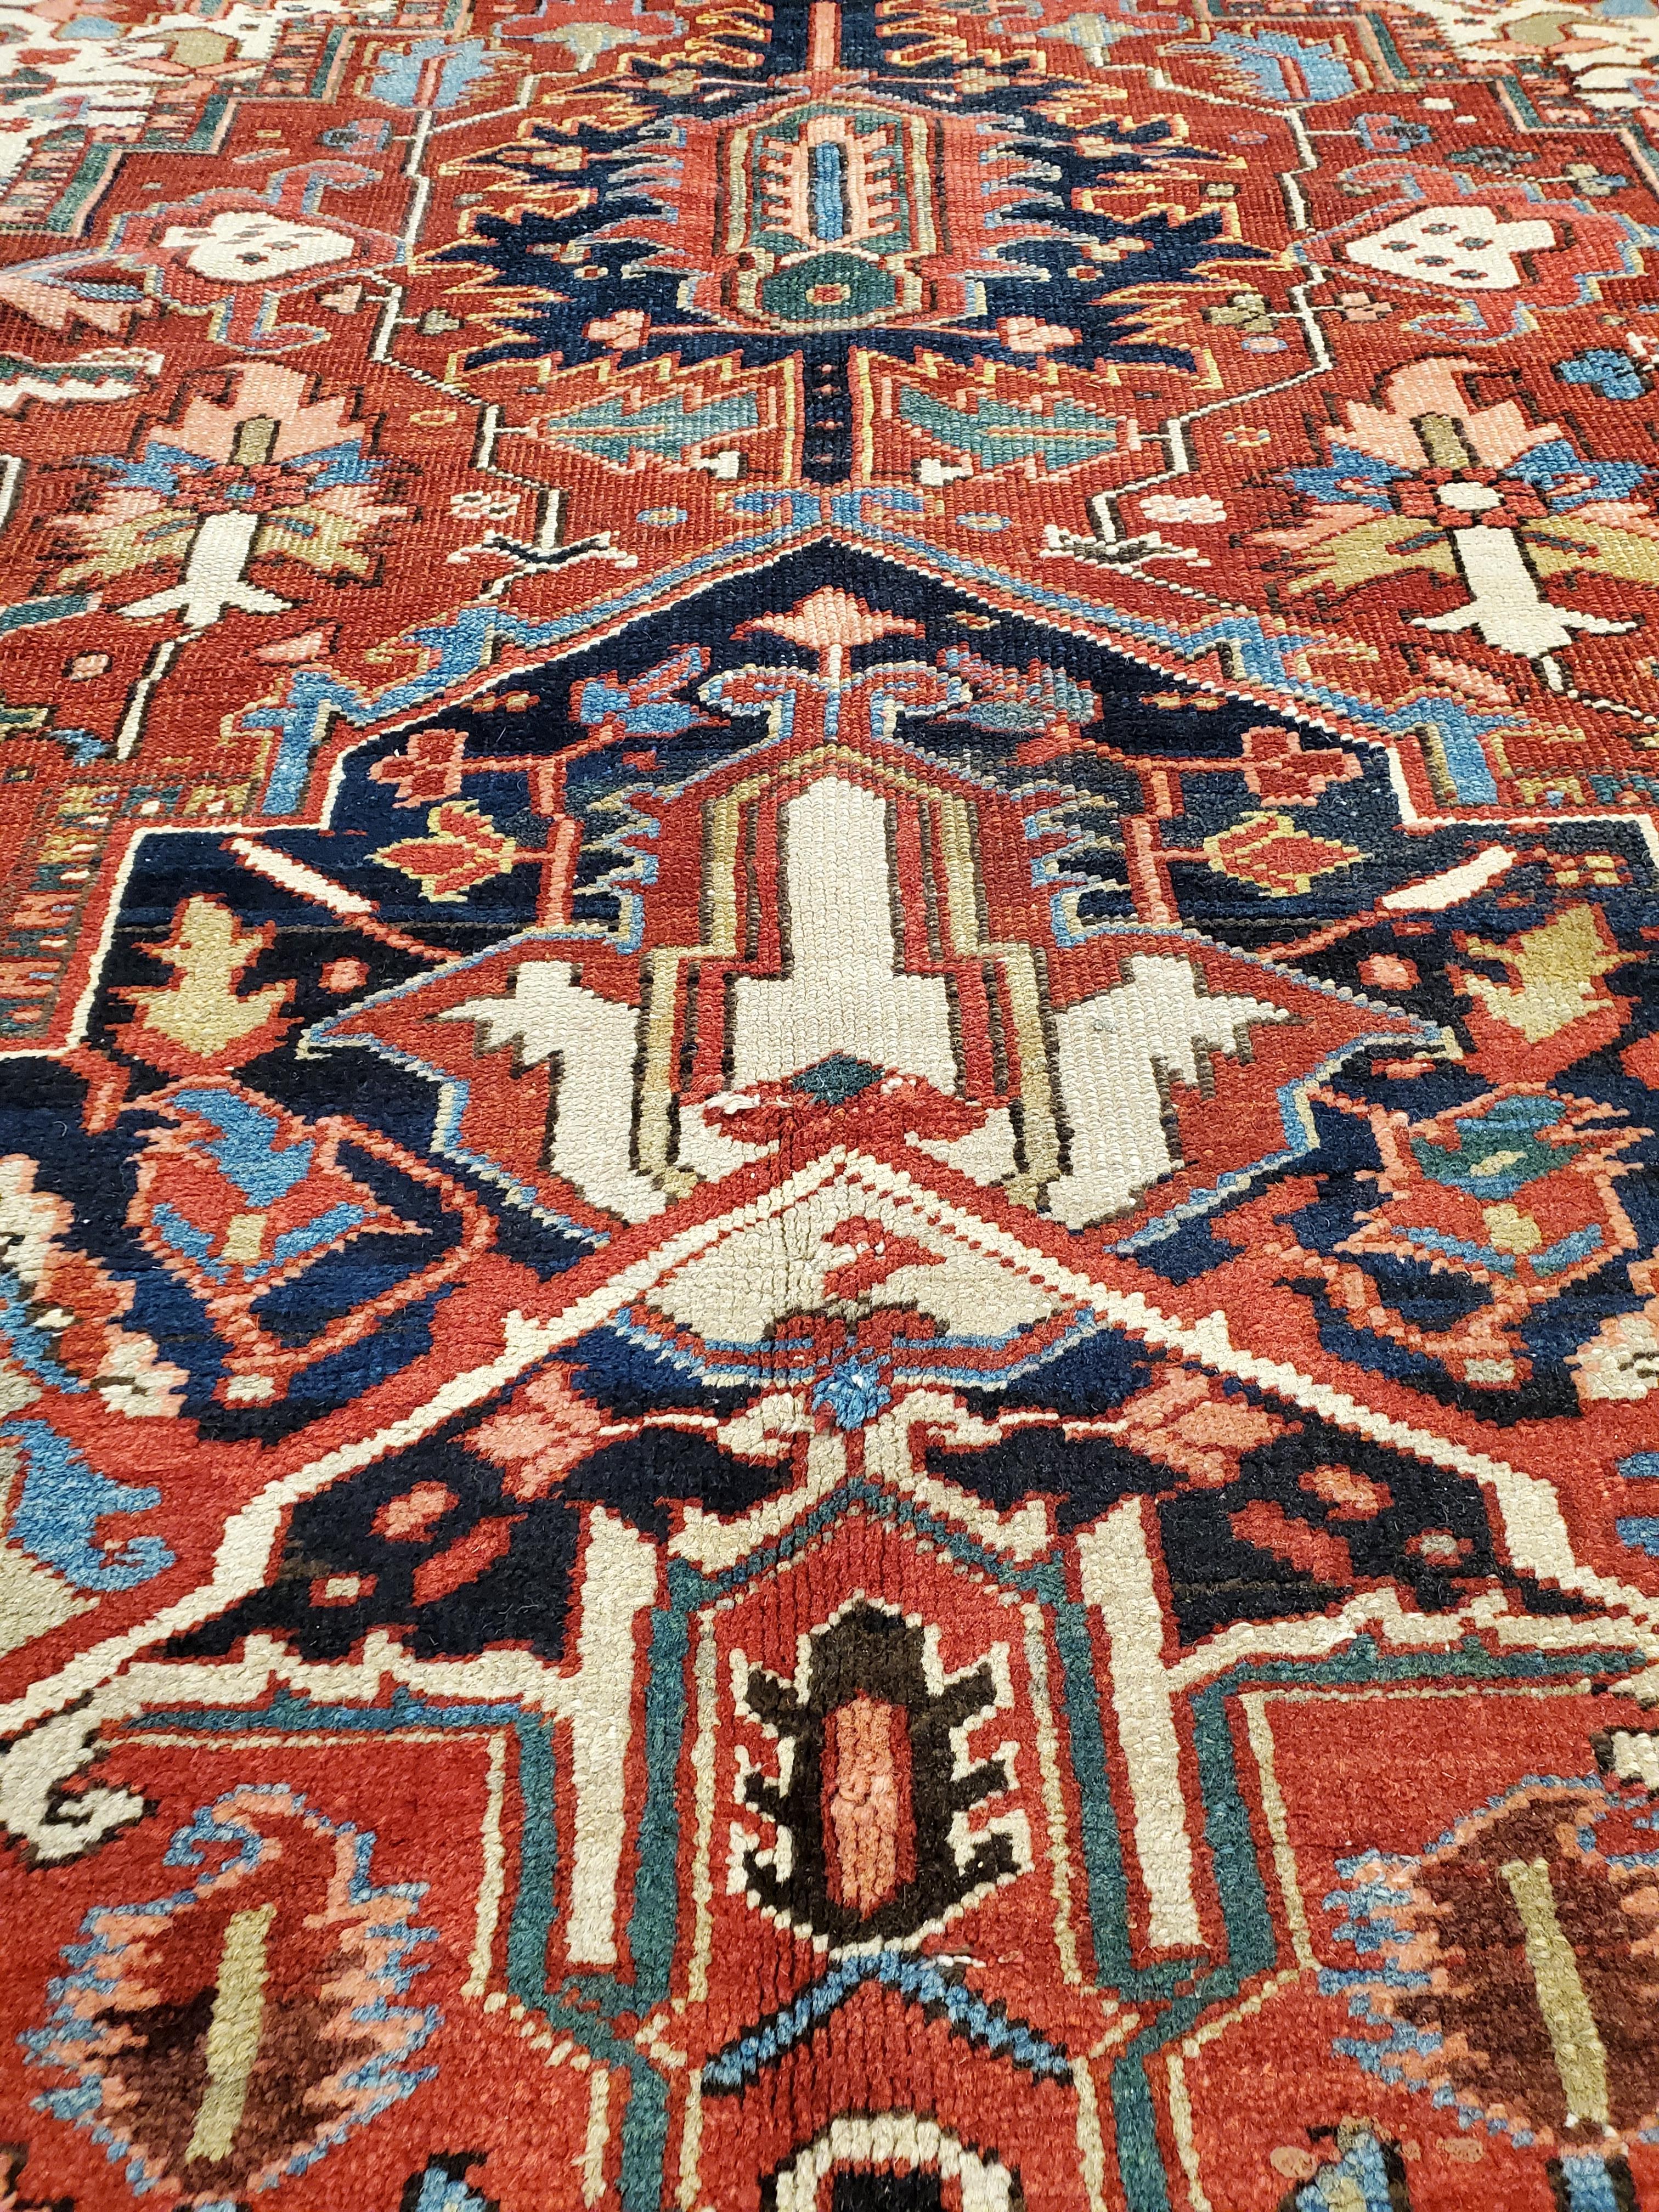 Antique Persian Heriz Carpet, Handmade Wool Oriental Rug, Rust, Navy, Lt Blue For Sale 3